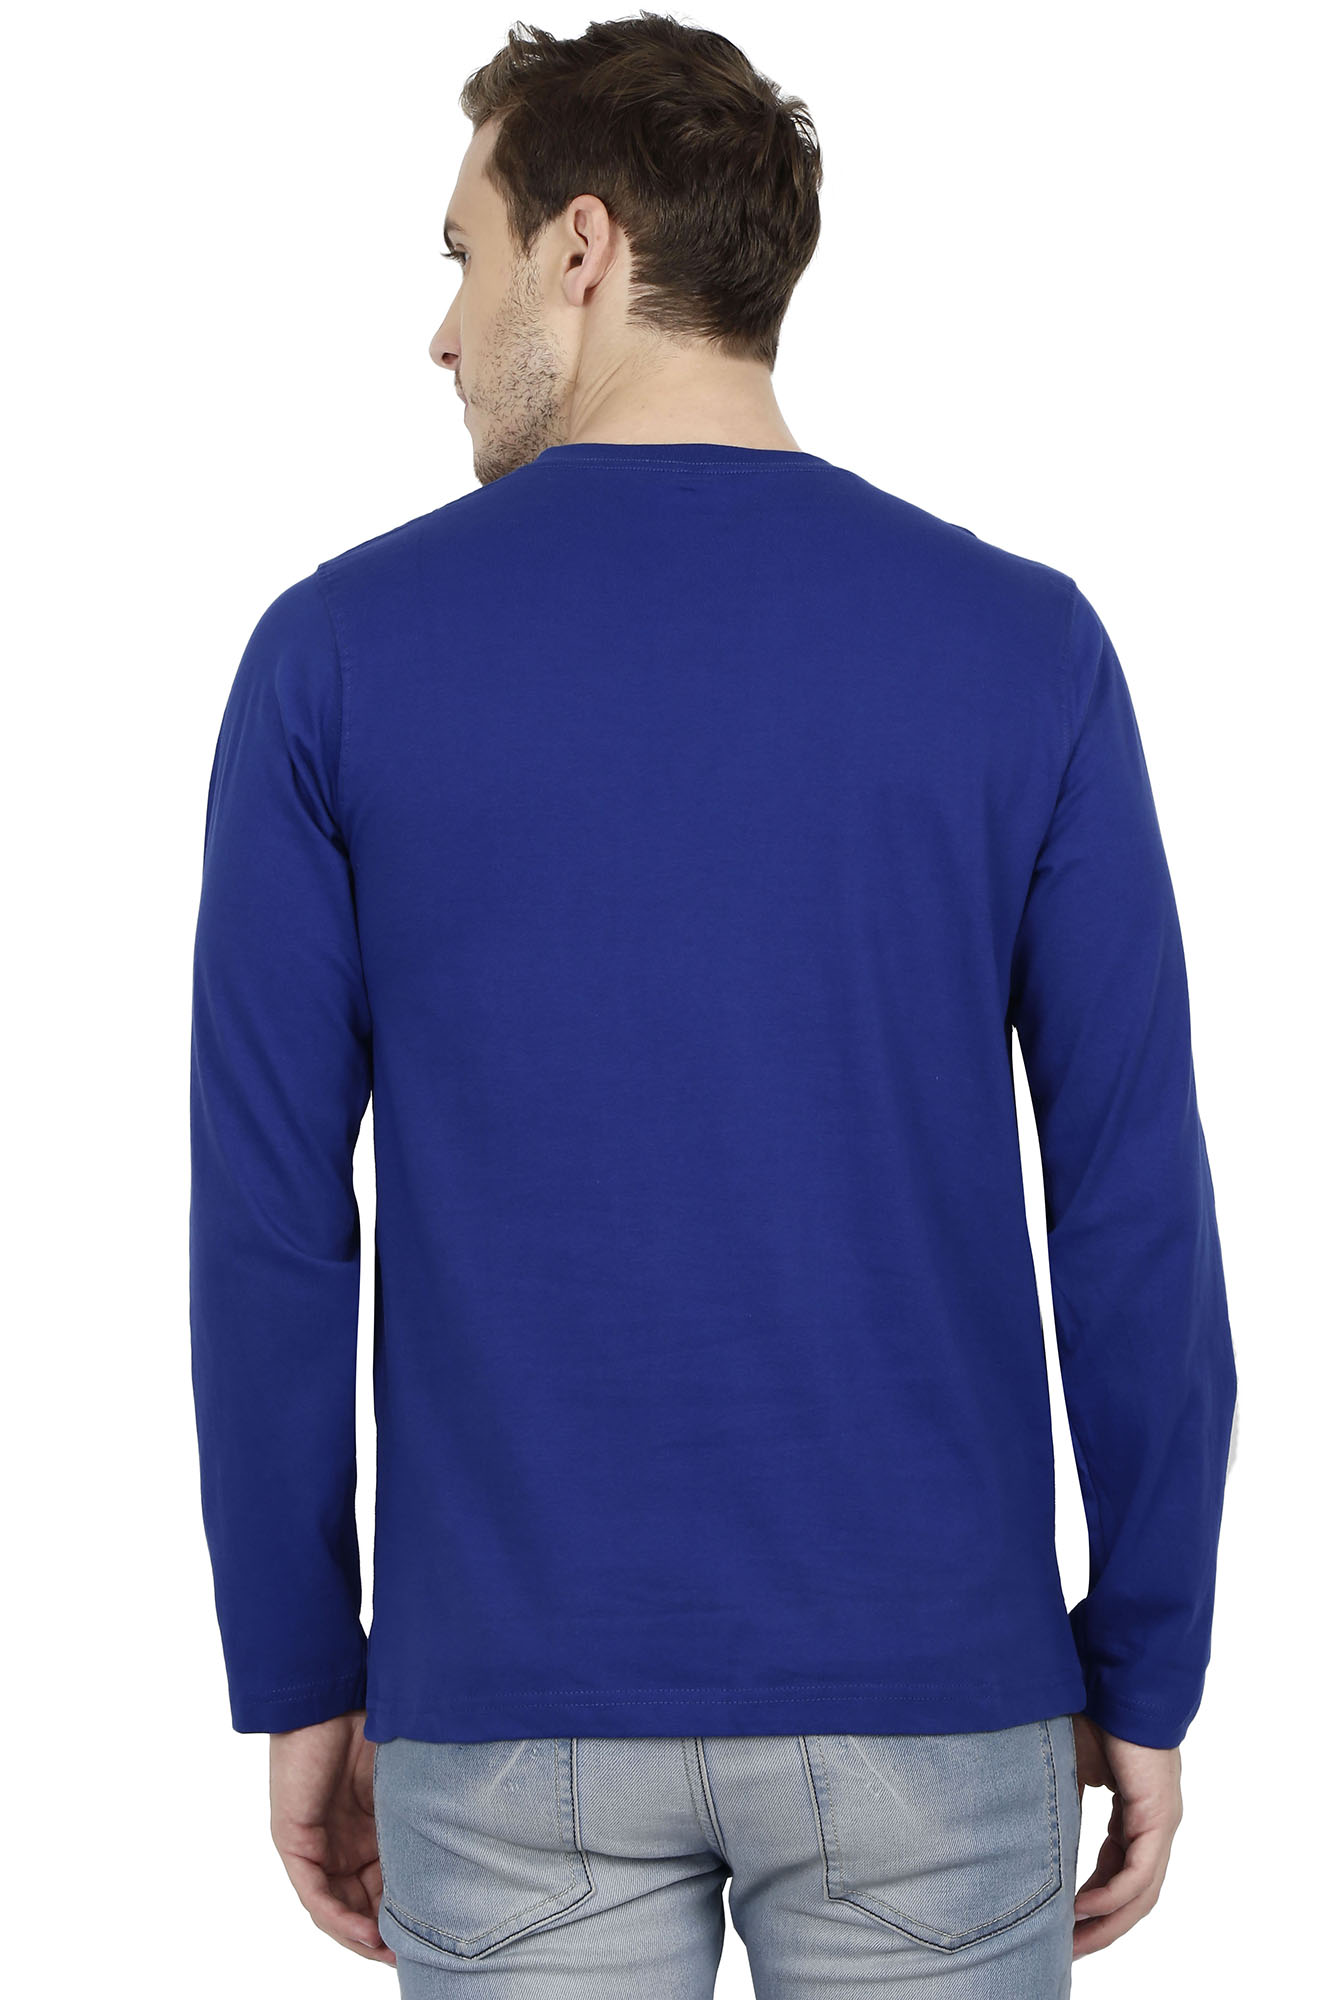 Blue Full Sleeve tshirt